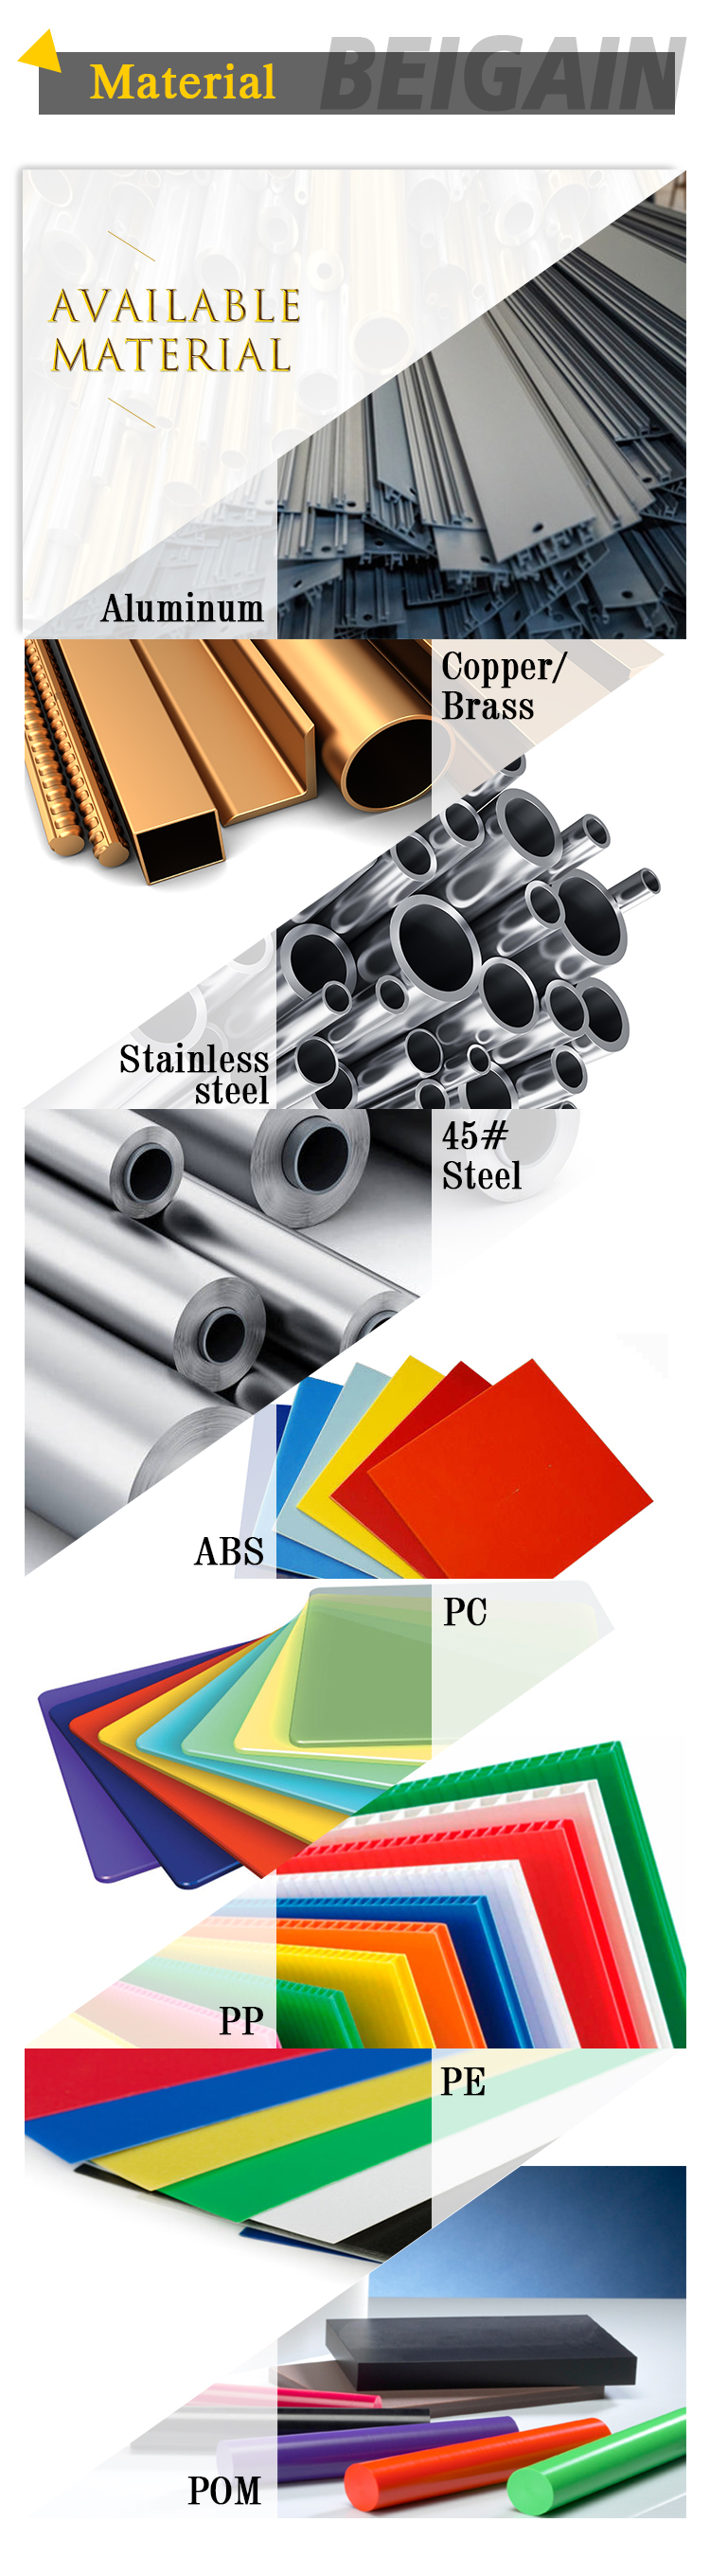 High Demand Machinery Design Services Preventive Maintenance Services Cnc Machining Parts Steel Spare Parts Aluminum Profile